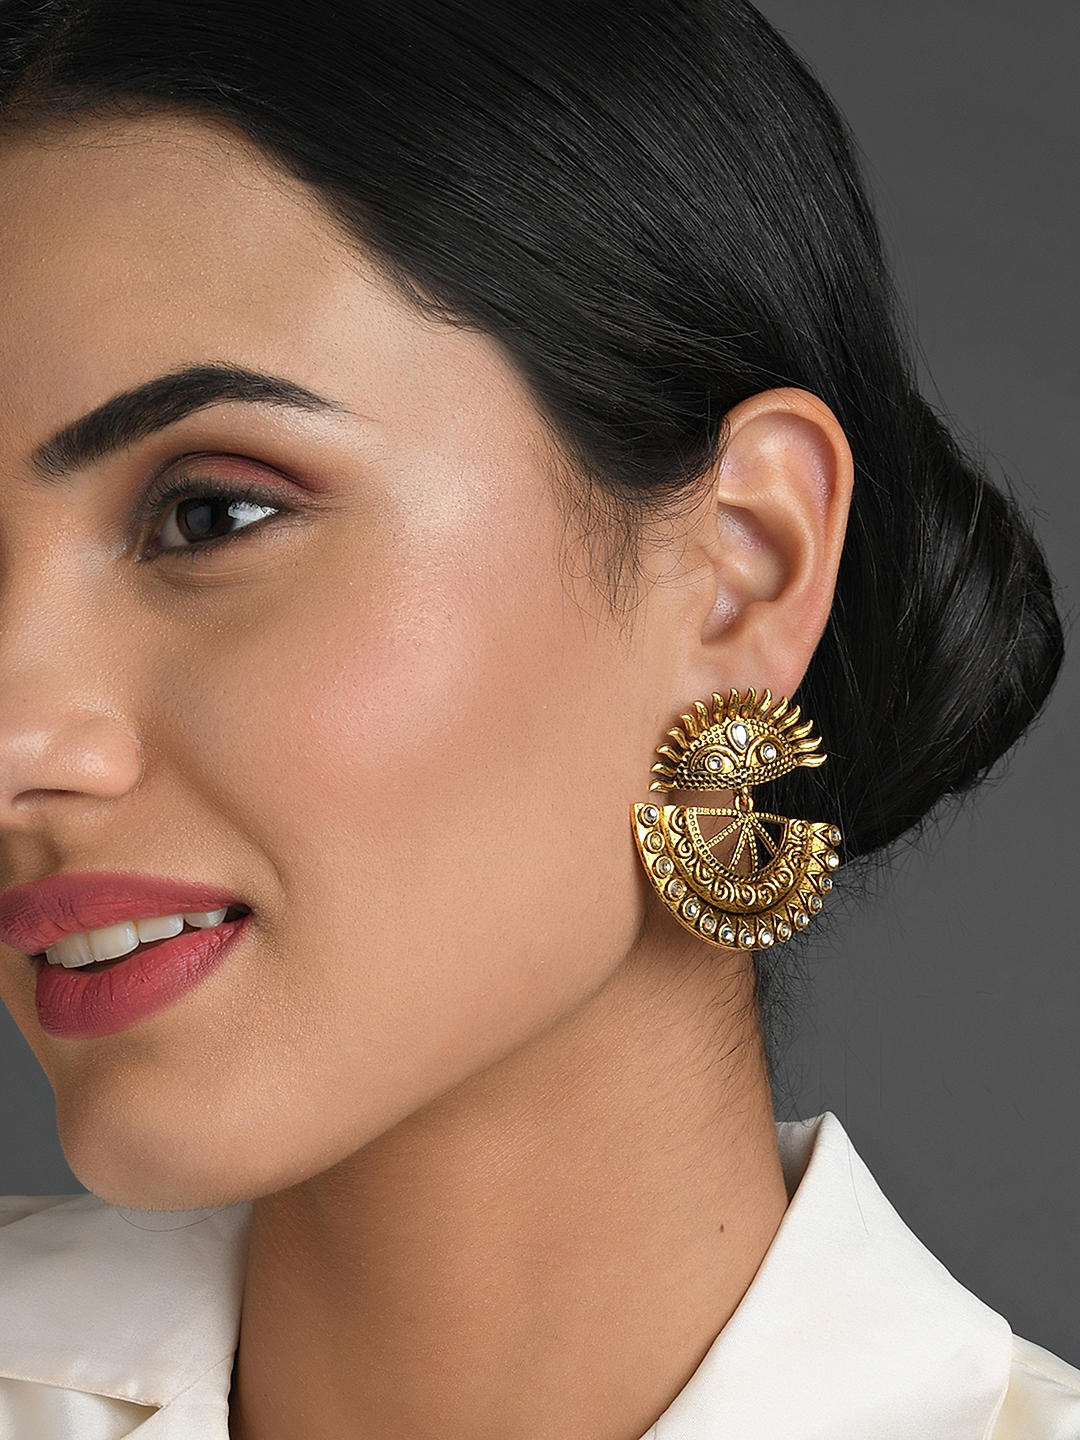 Best Earrings for Women | Latest Earrings Designs for Girls Online | Starkle